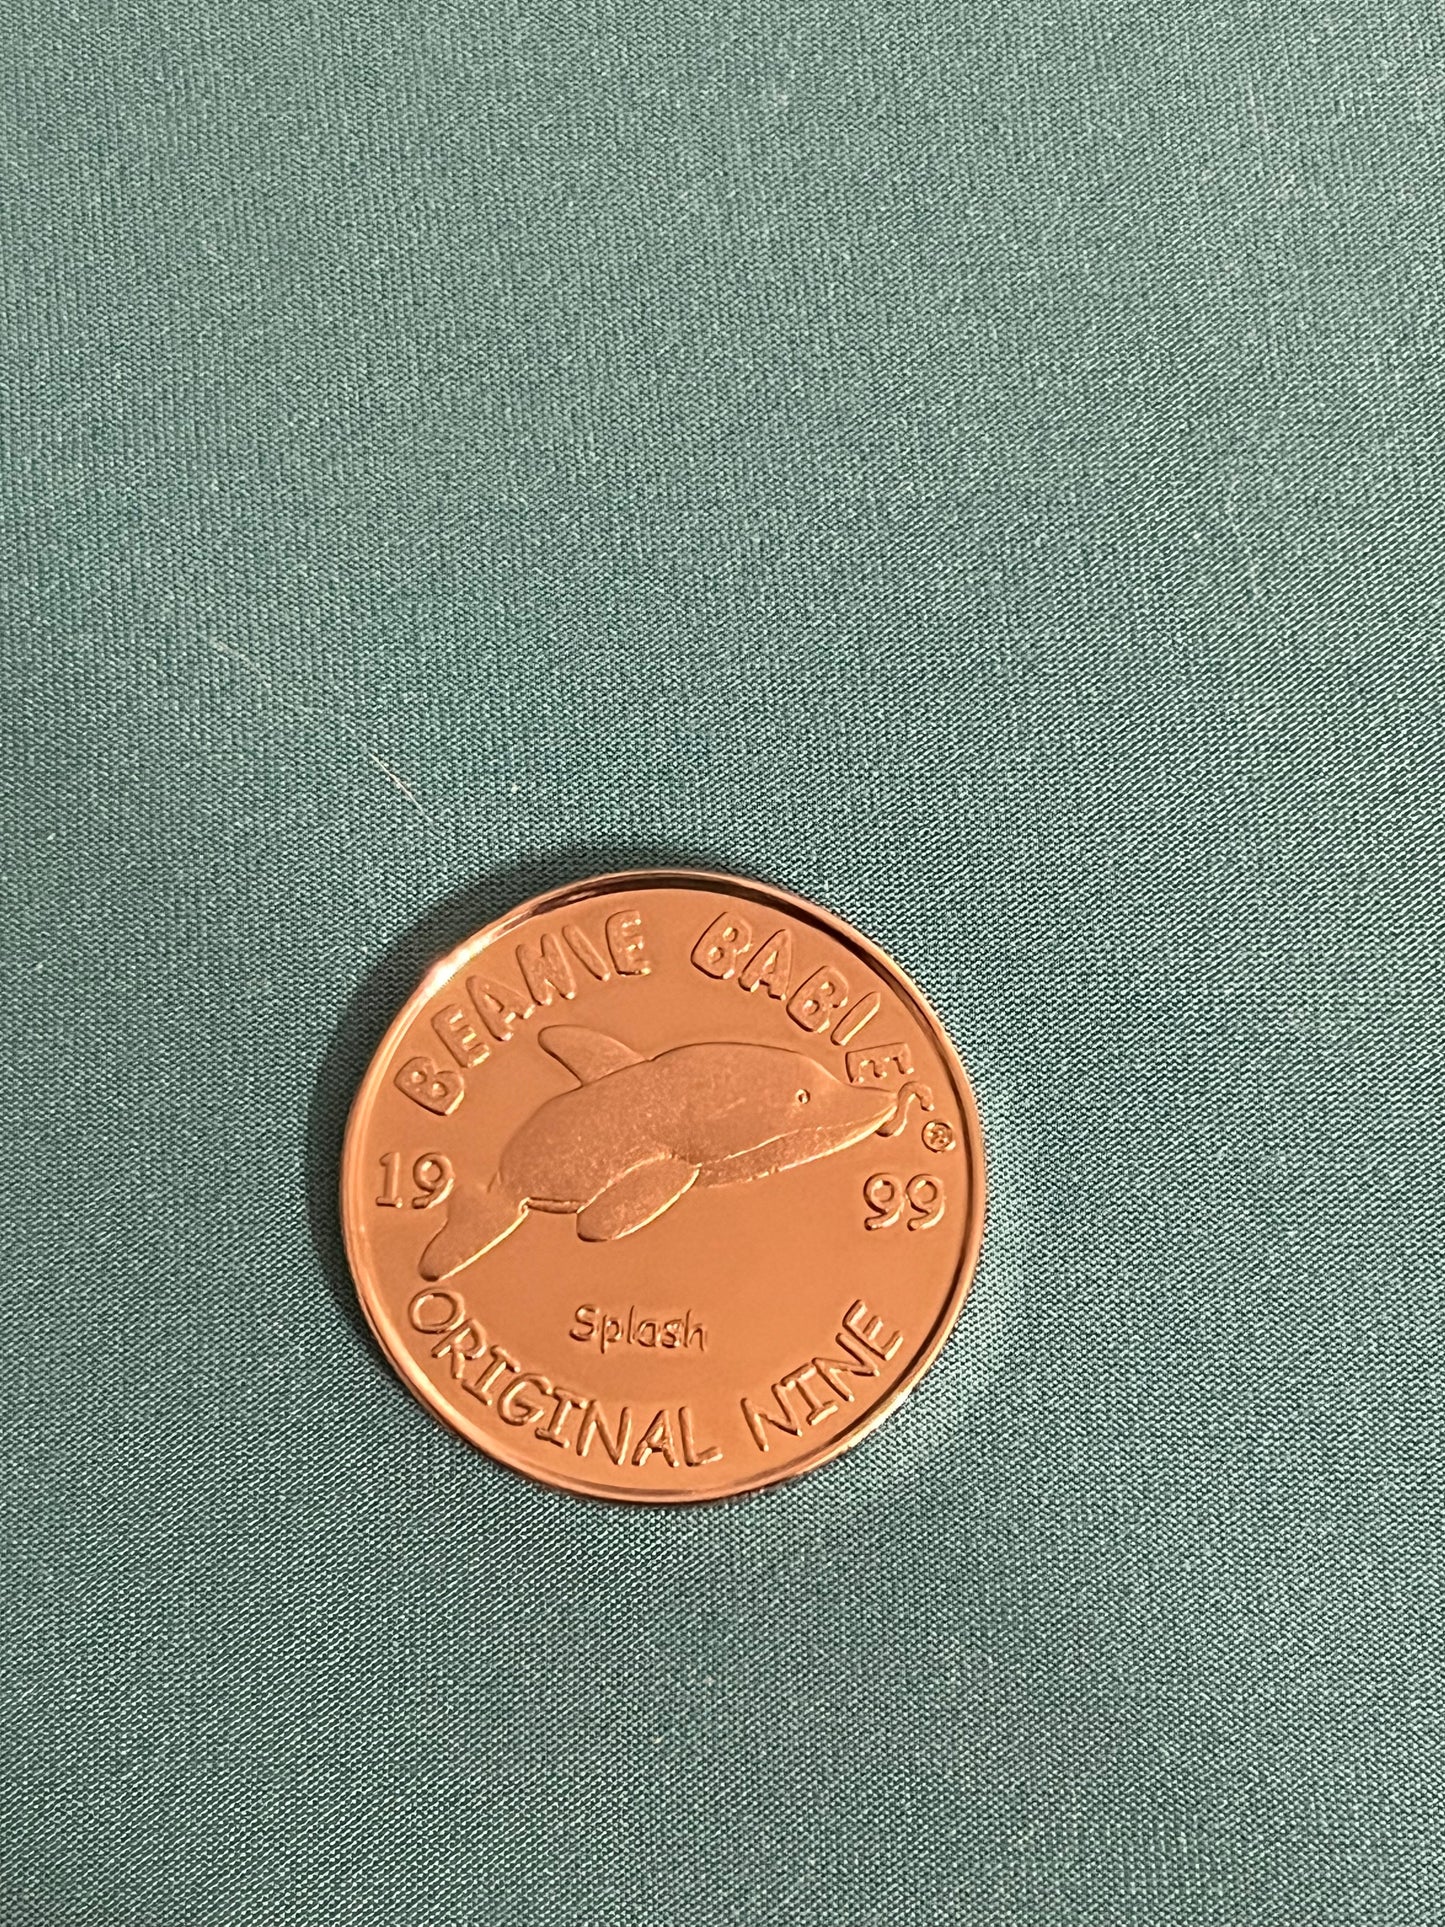 Beanie Babies 1999 Splash Original Nine TY Official Club Coin - Copper-Nickel Proof